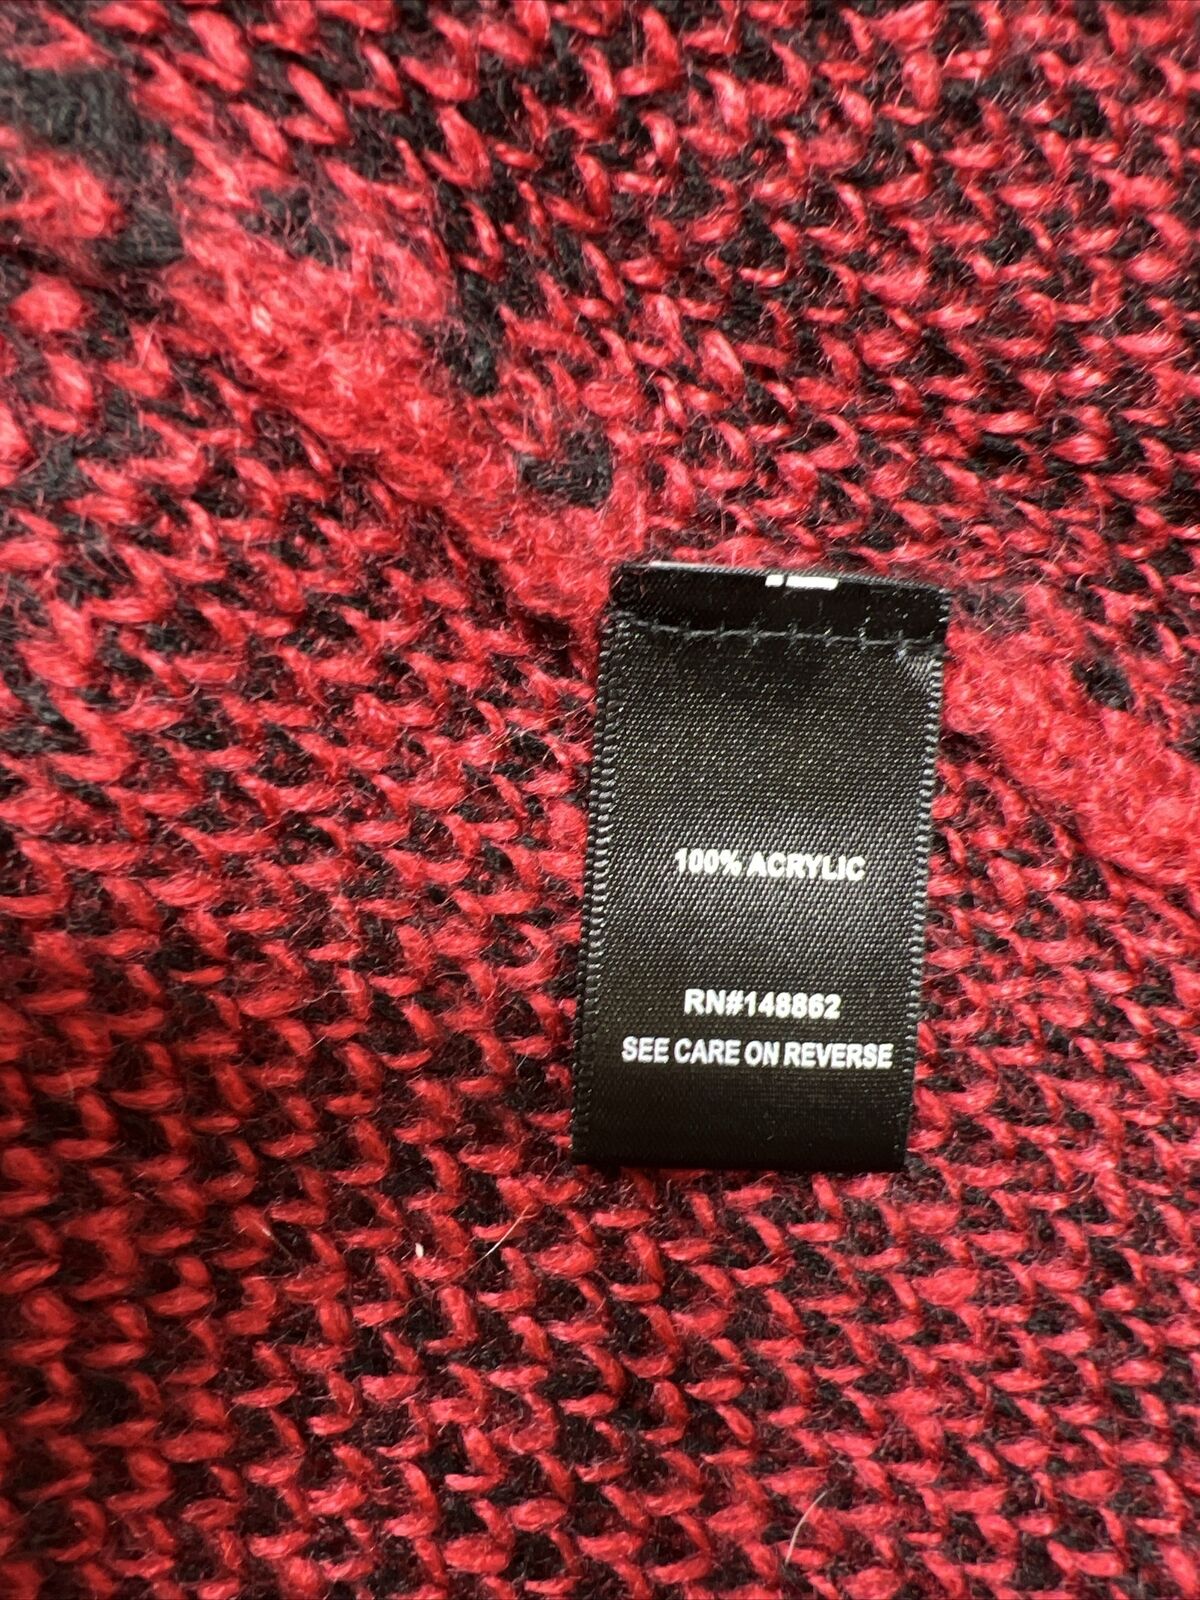 Torrid Women's Red and Black Long Knit Cardigan Sweater - Plus 0X